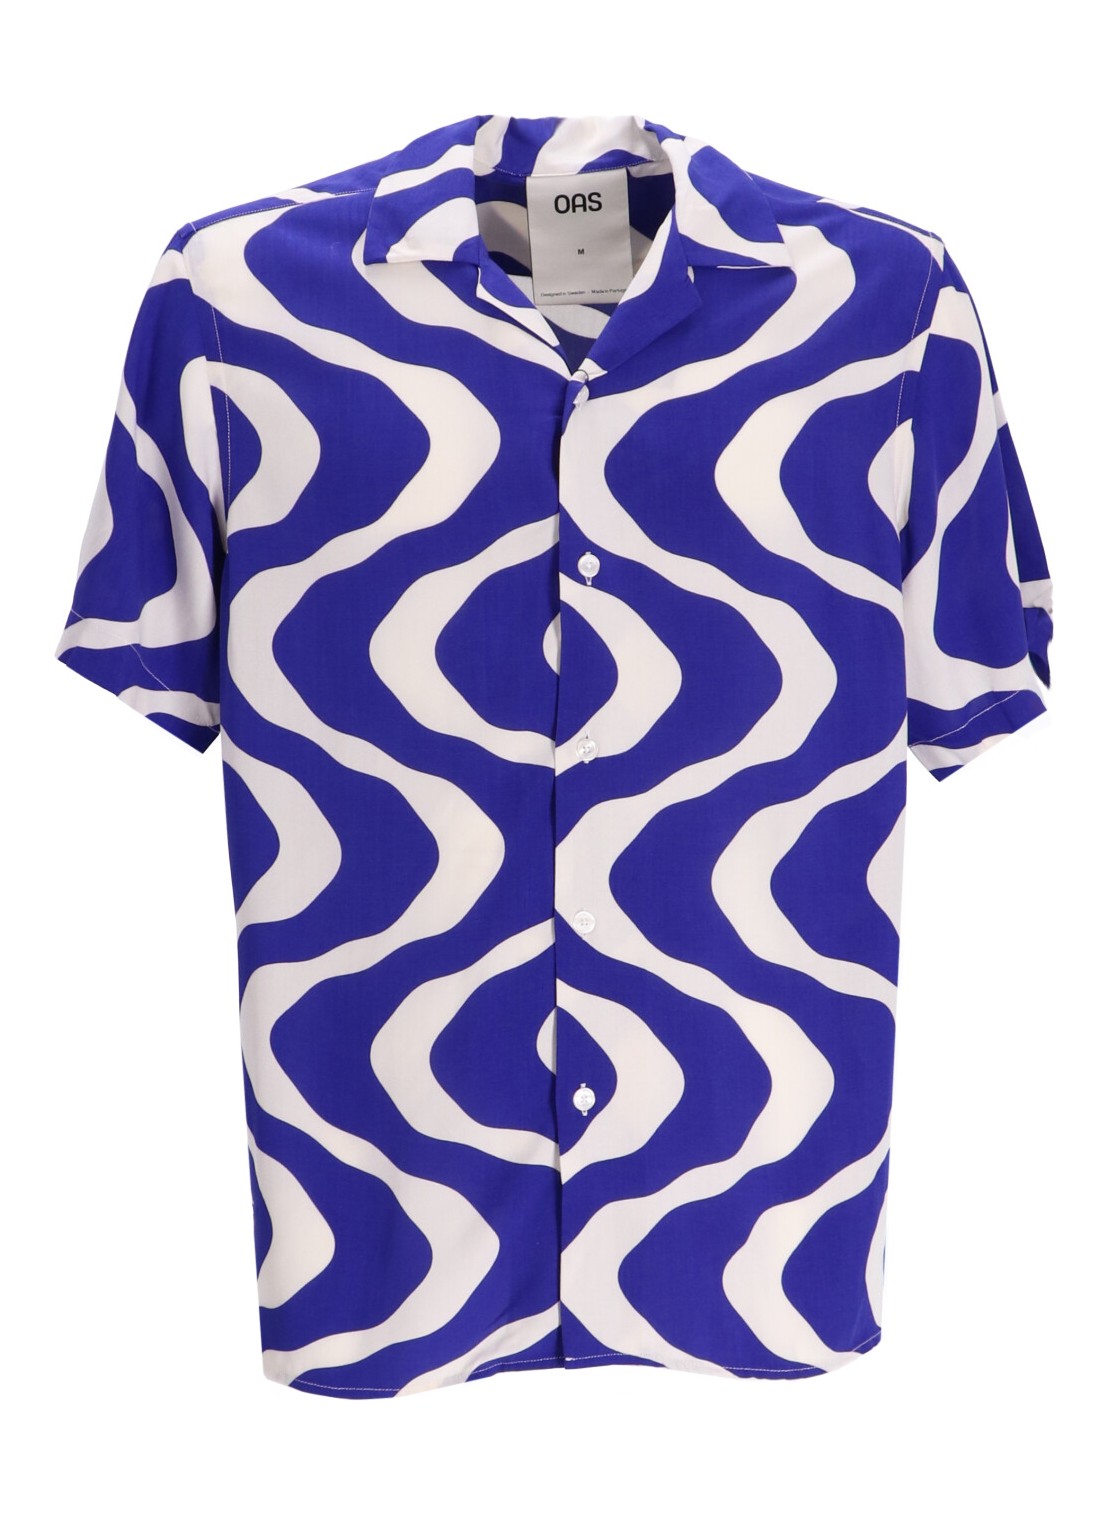 Camiseria oas shirt manblue rippling viscose shirt - 700550 blue talla M
 